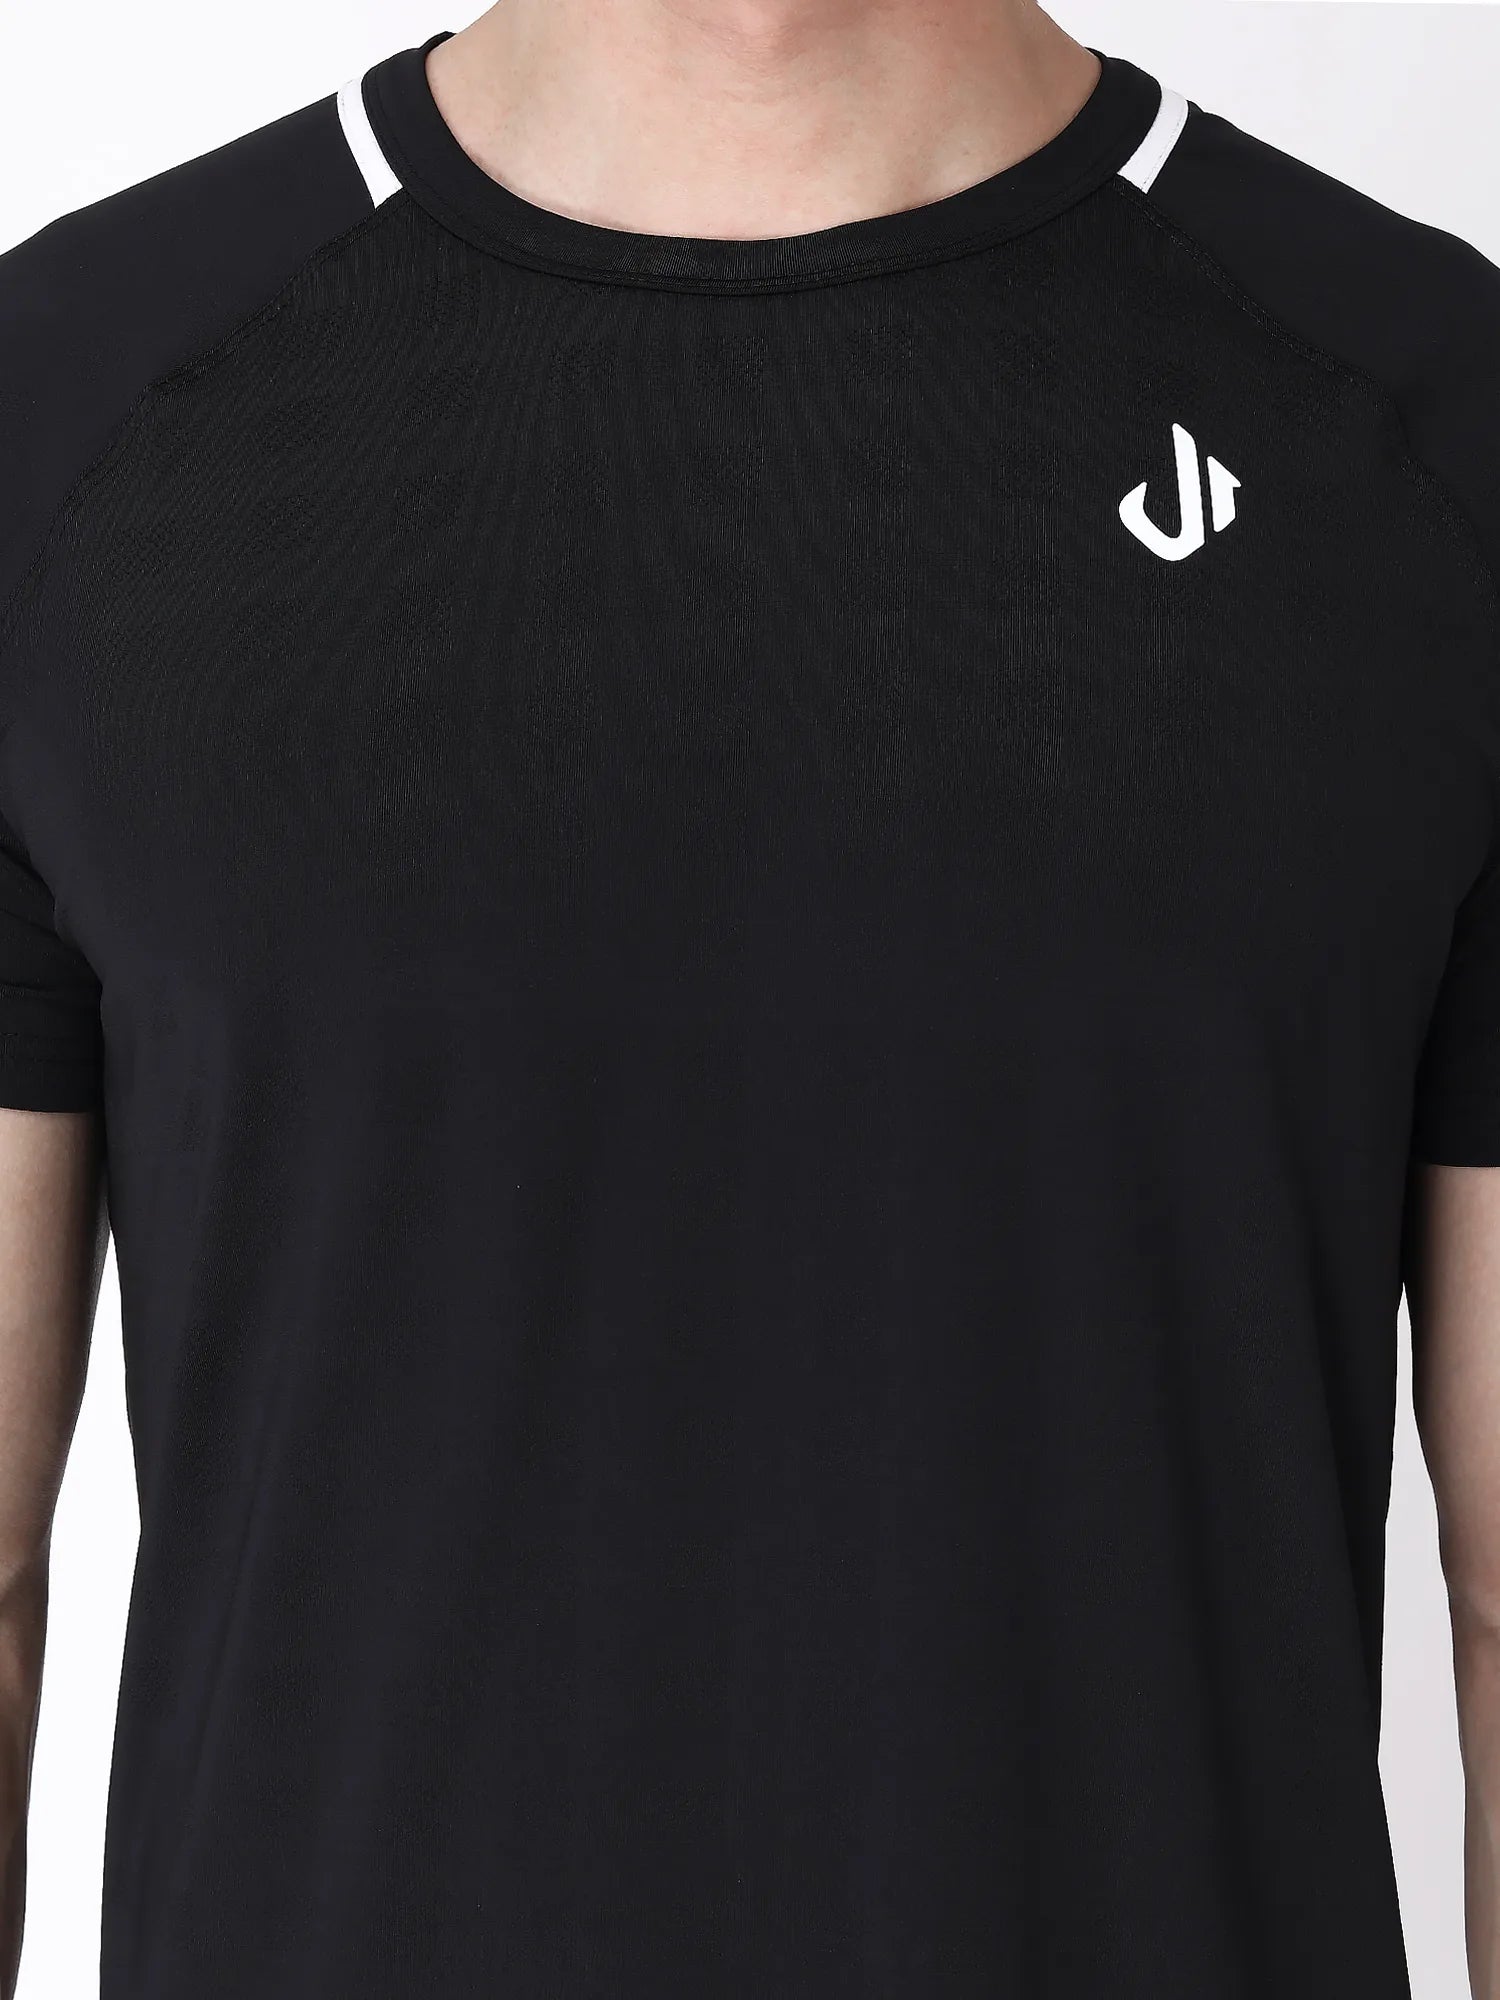 Jeffa Running T-shirt in Black